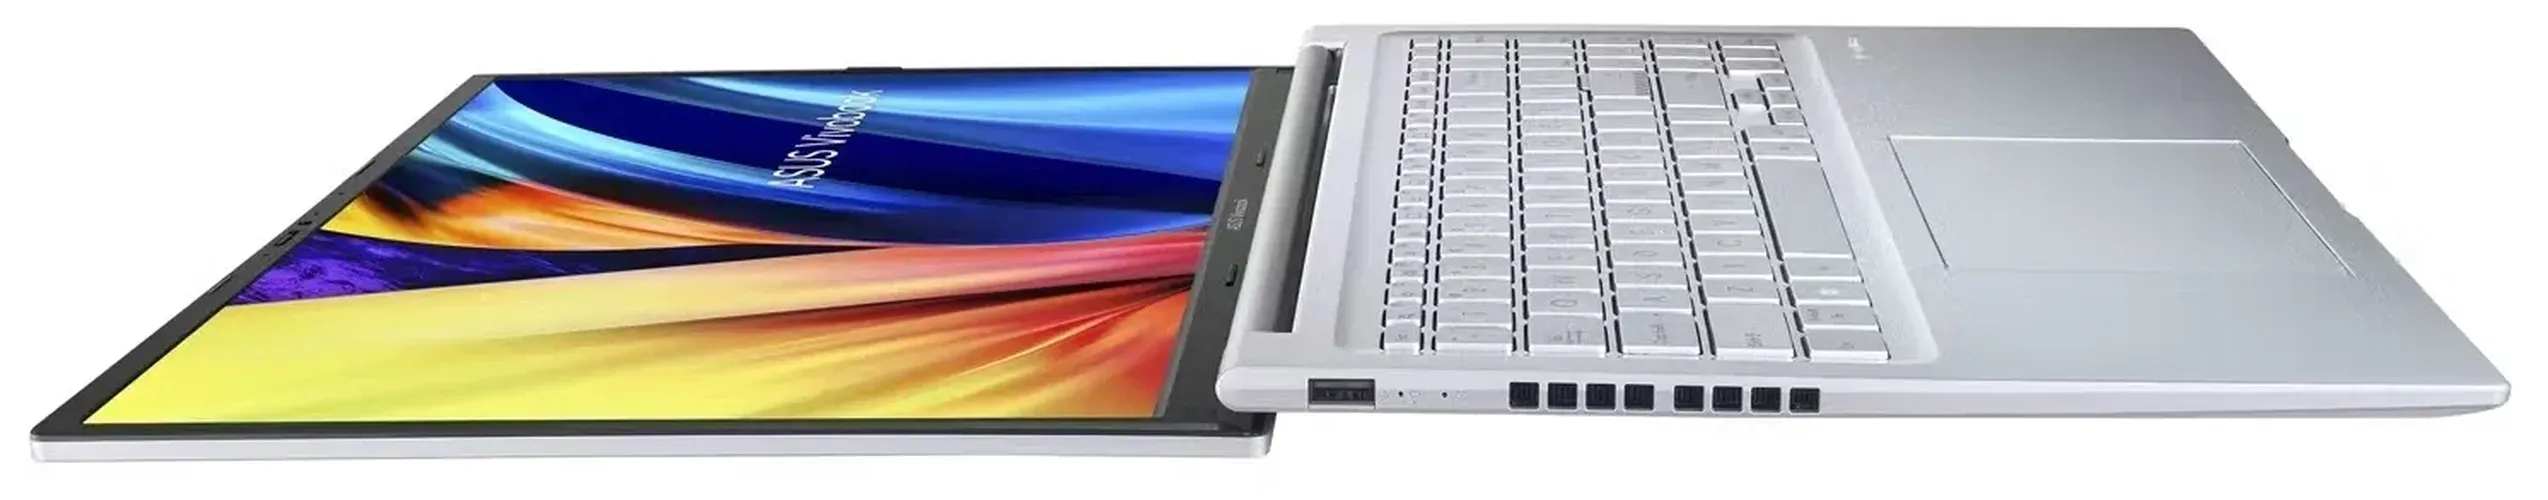 Noutbuk Asus VivoBook Pro 16 i5-12500H, 512 GB SSD, 16 GB DDR4, купить недорого